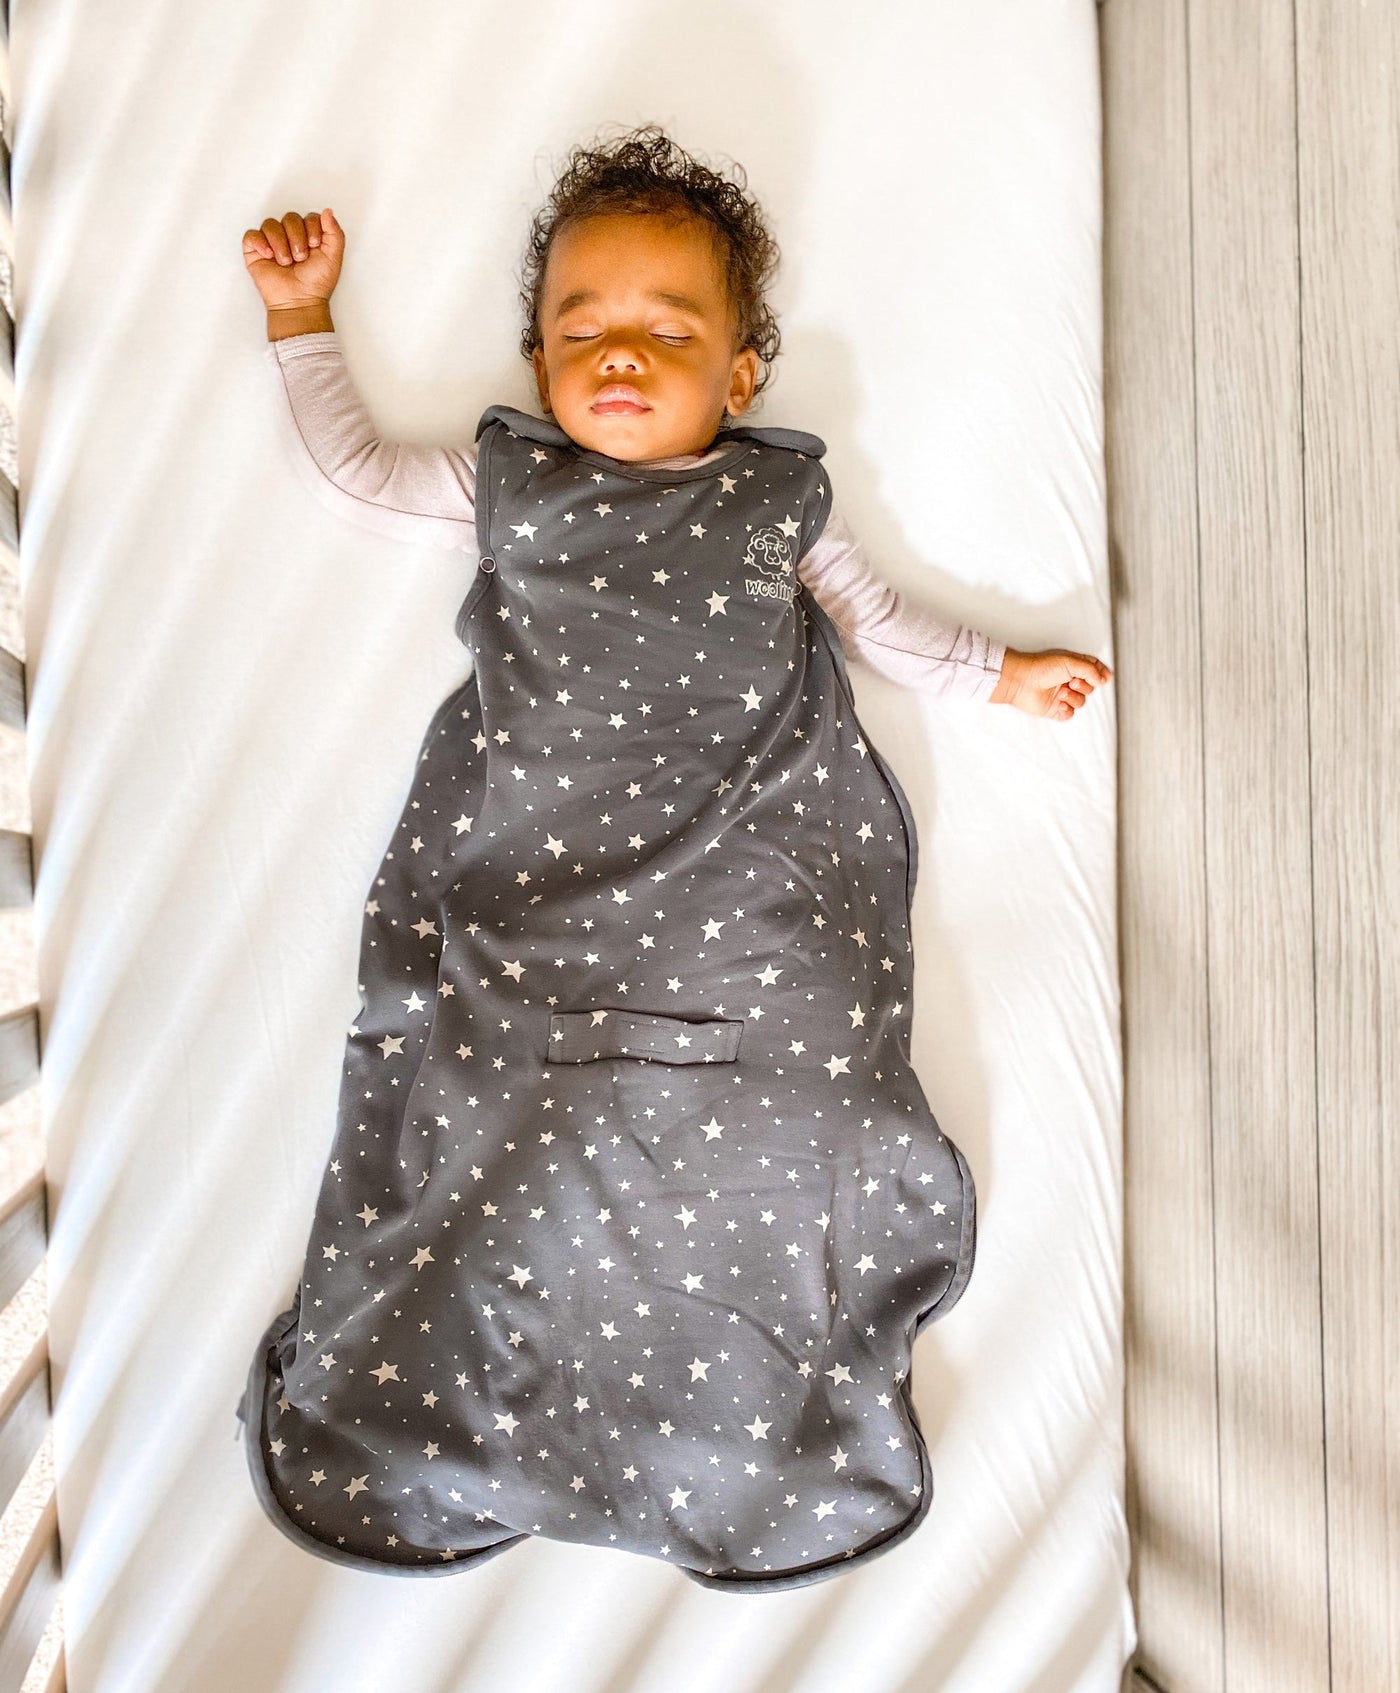 4 Season® Ultimate Baby Sleep Bag, Merino Wool, 2 Months - 2 Years, Star Gray